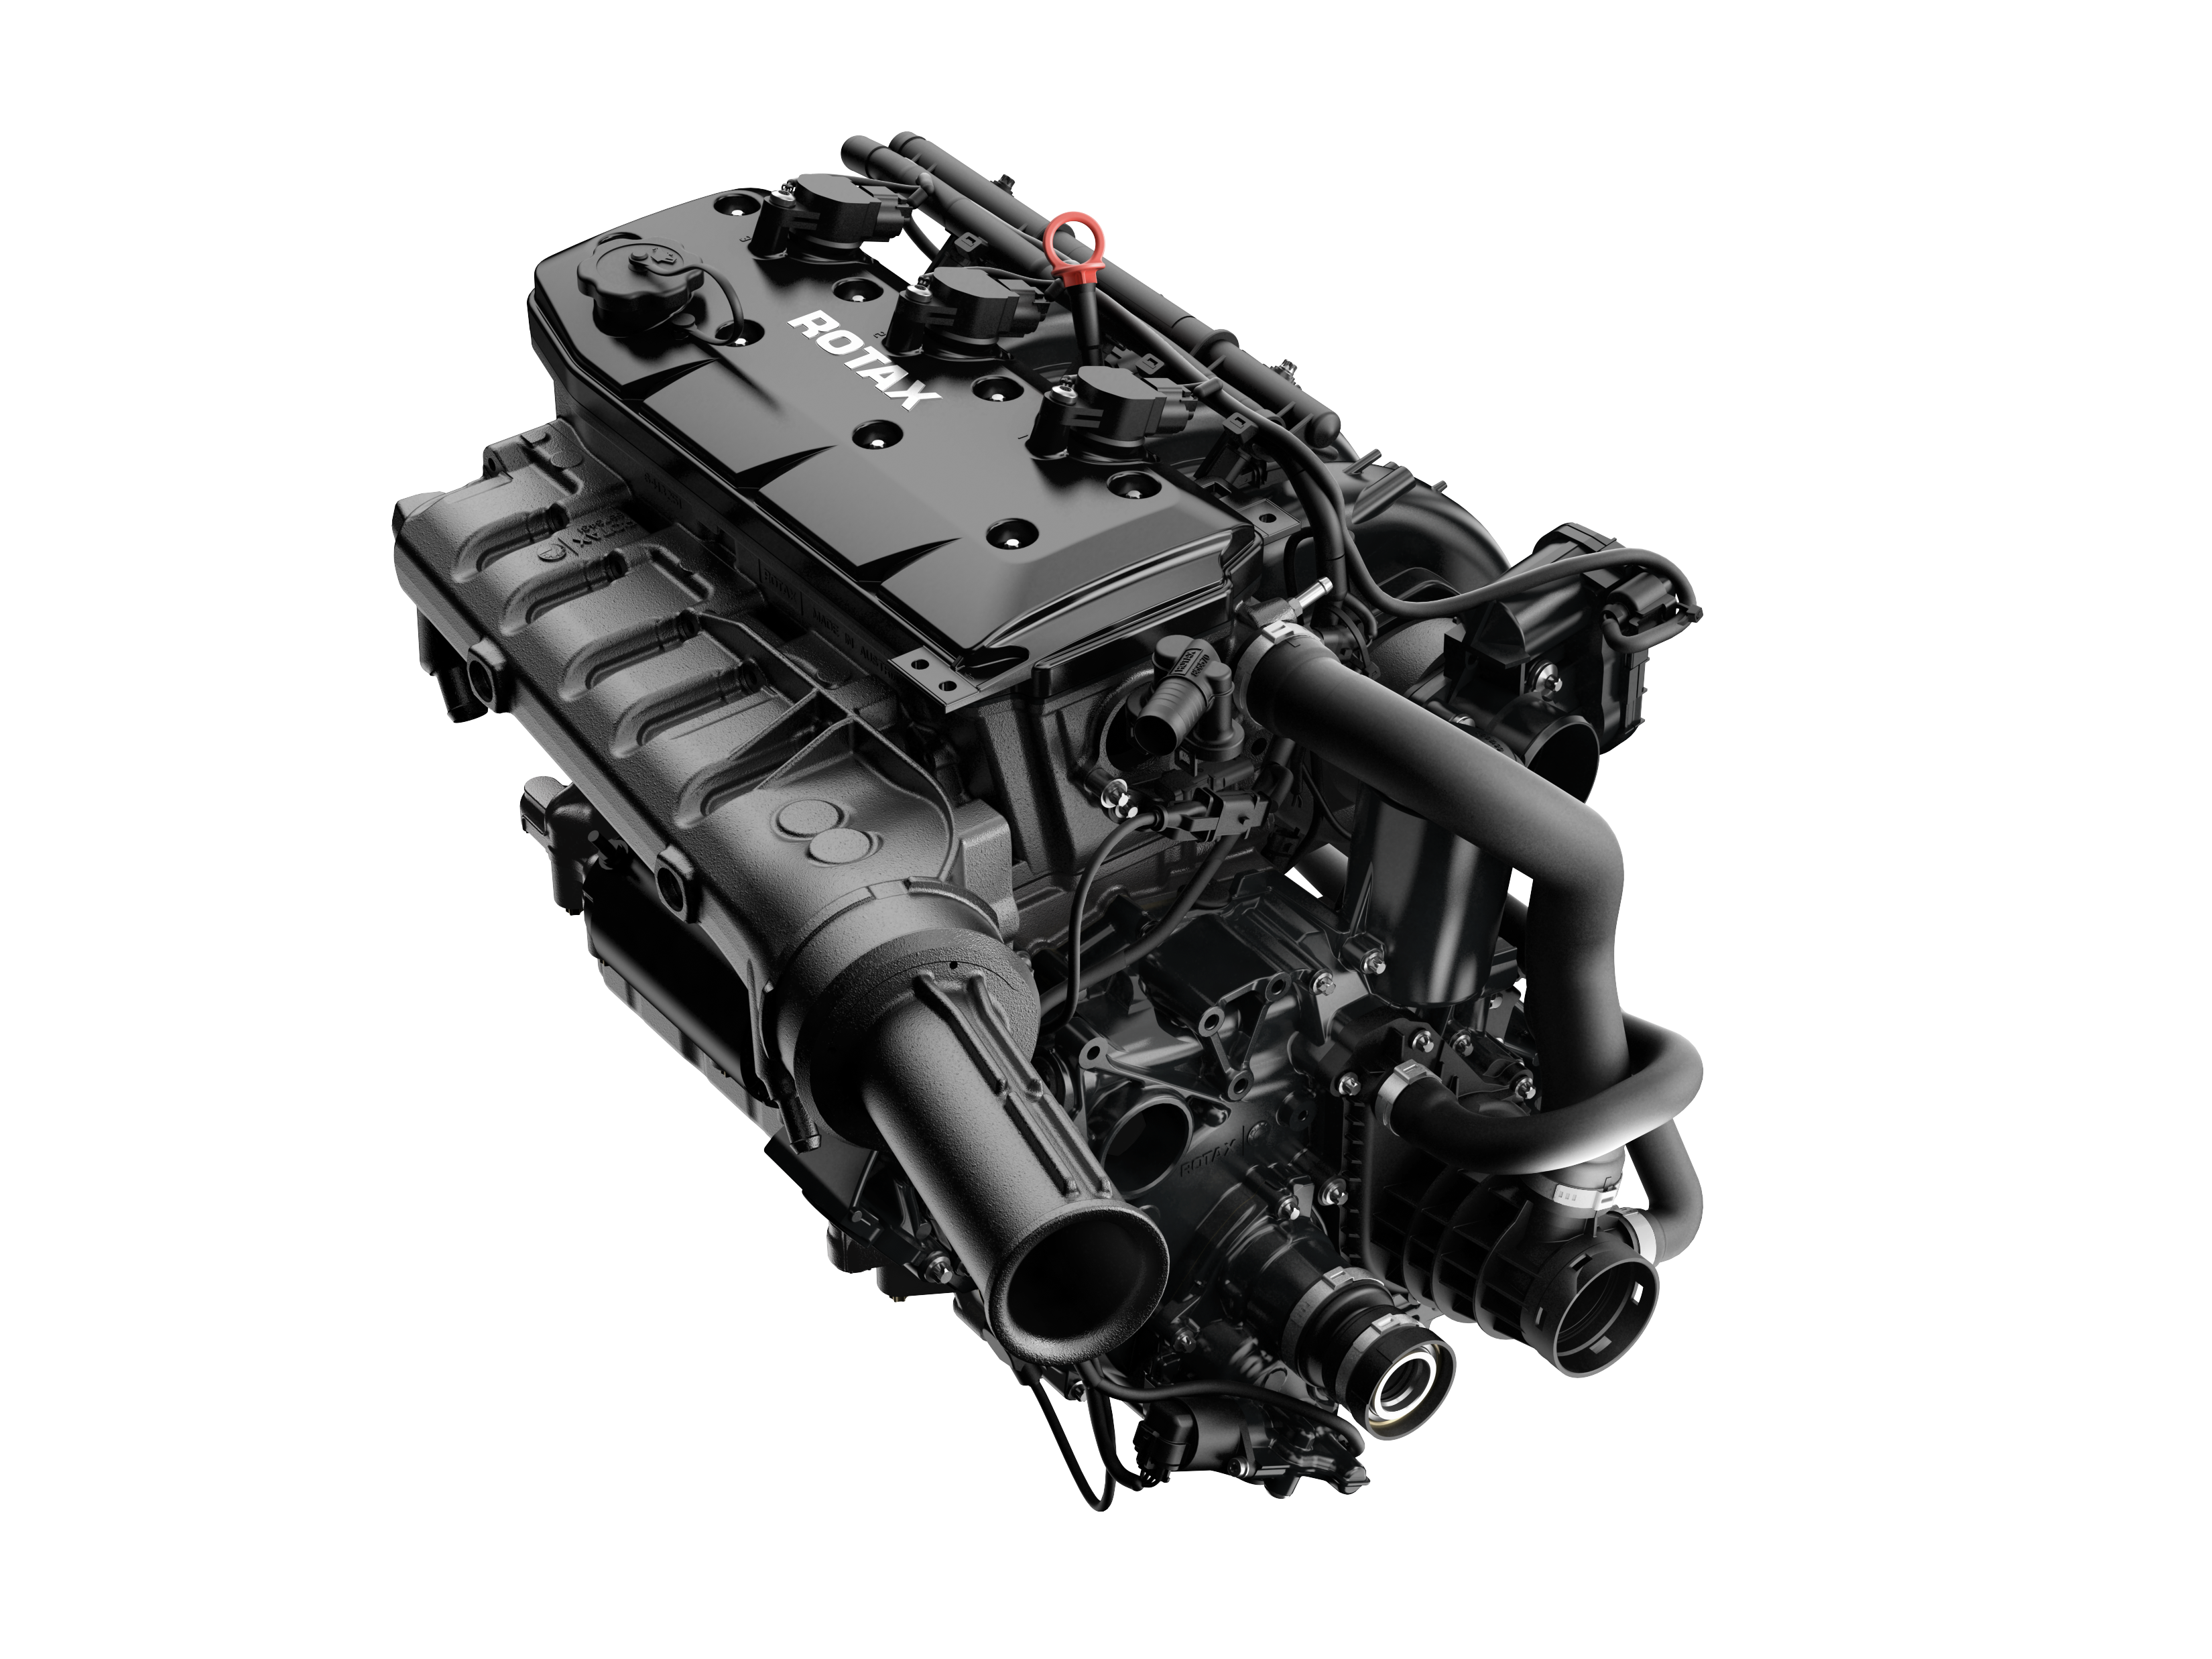 Rotax 1630 motor 300 HP